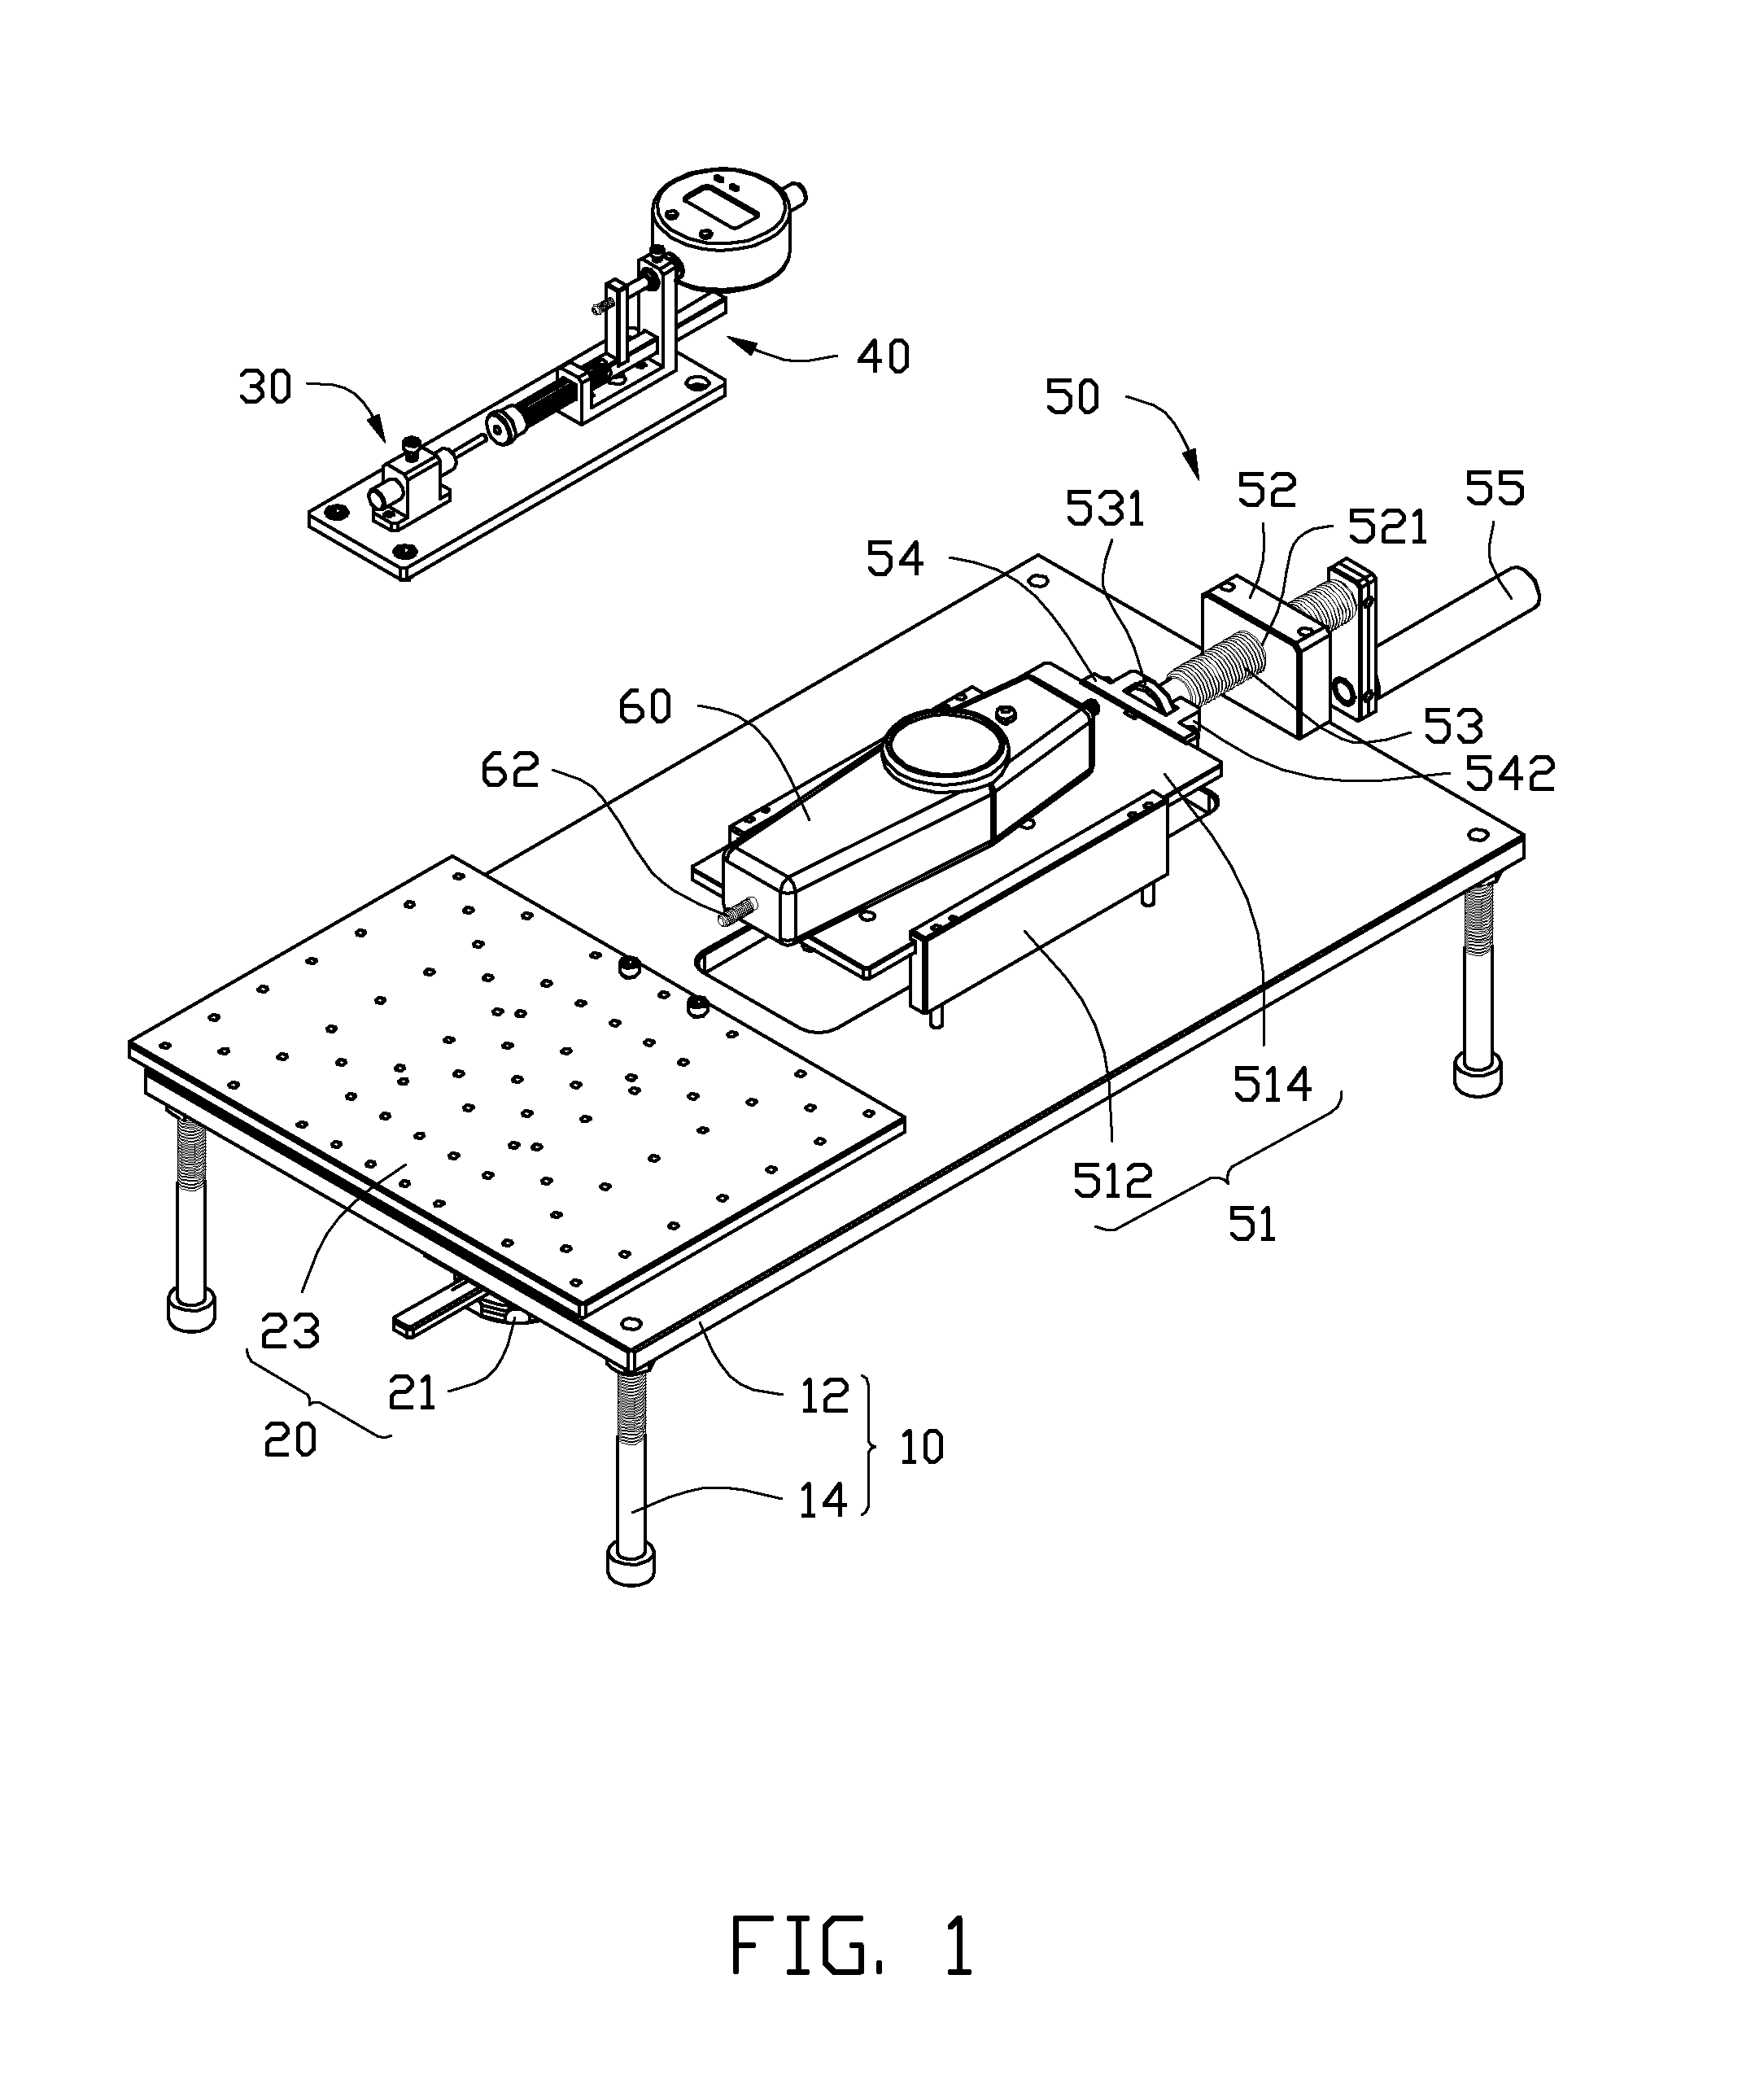 Measurement apparatus for measuring elasticity coefficient of coil spring